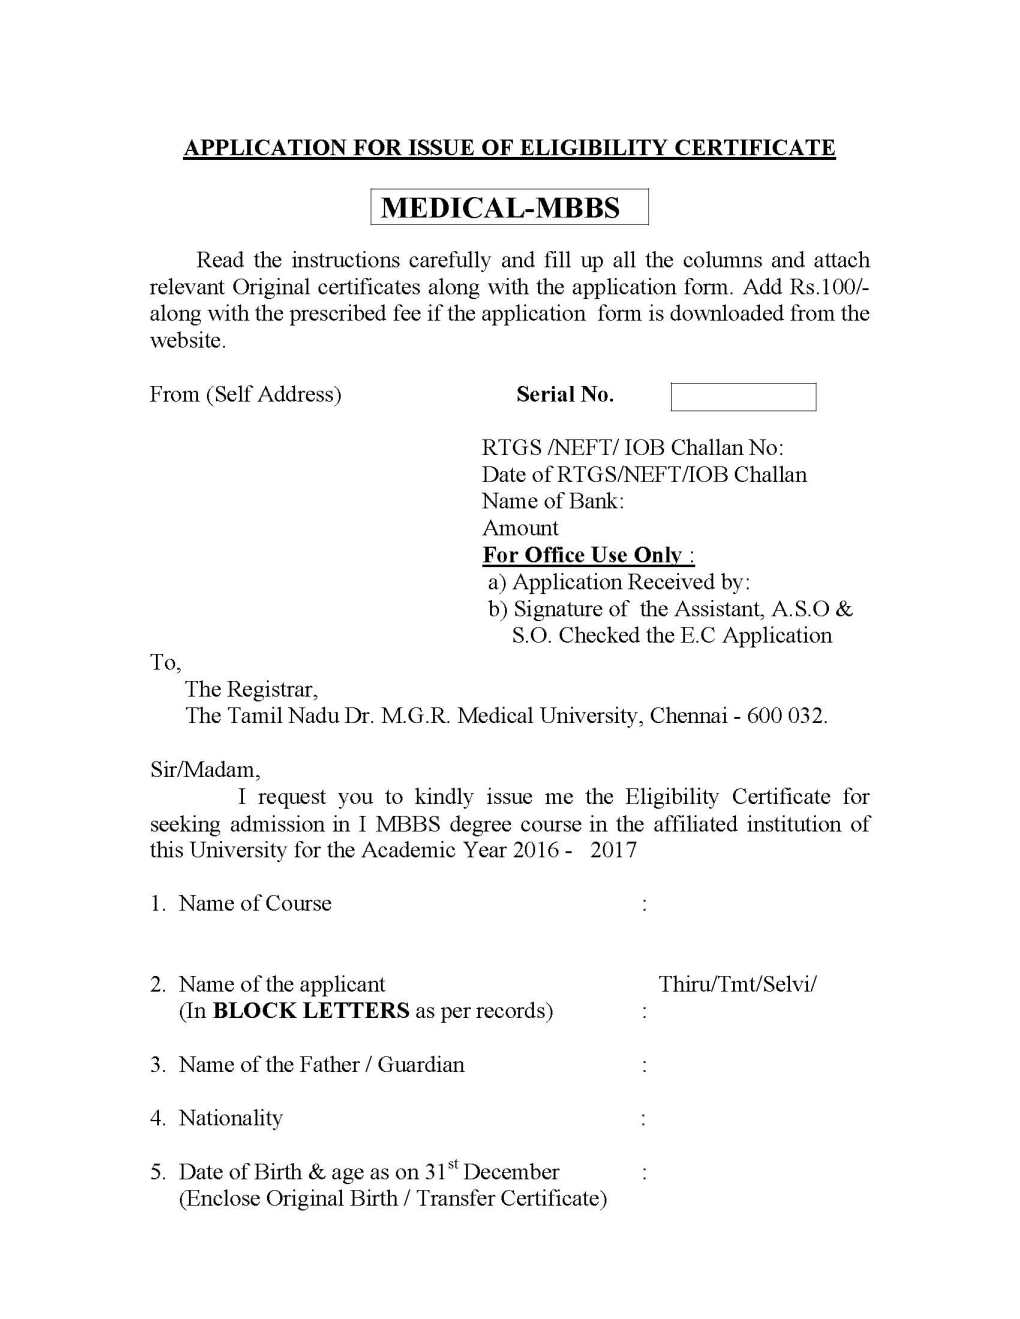 tamilnadu medical university thesis